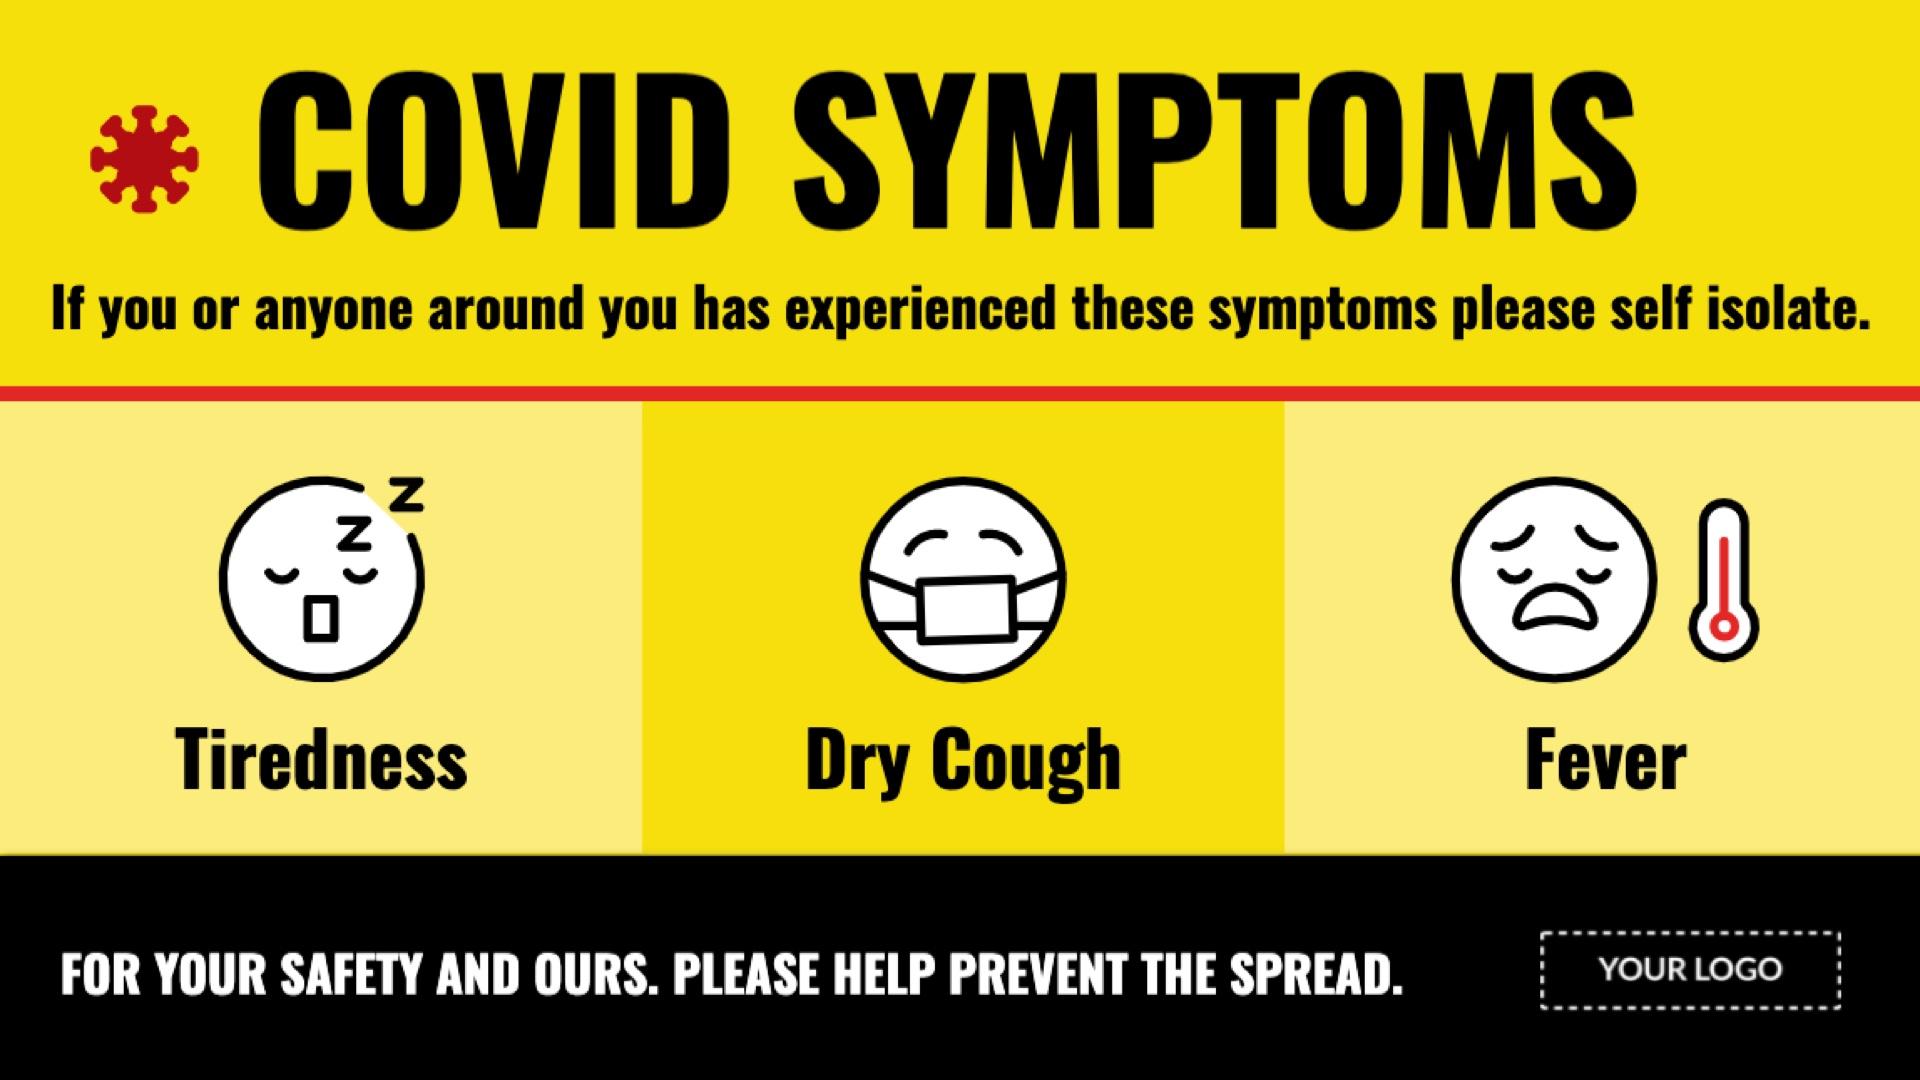 covid-19 symptoms digital signage template